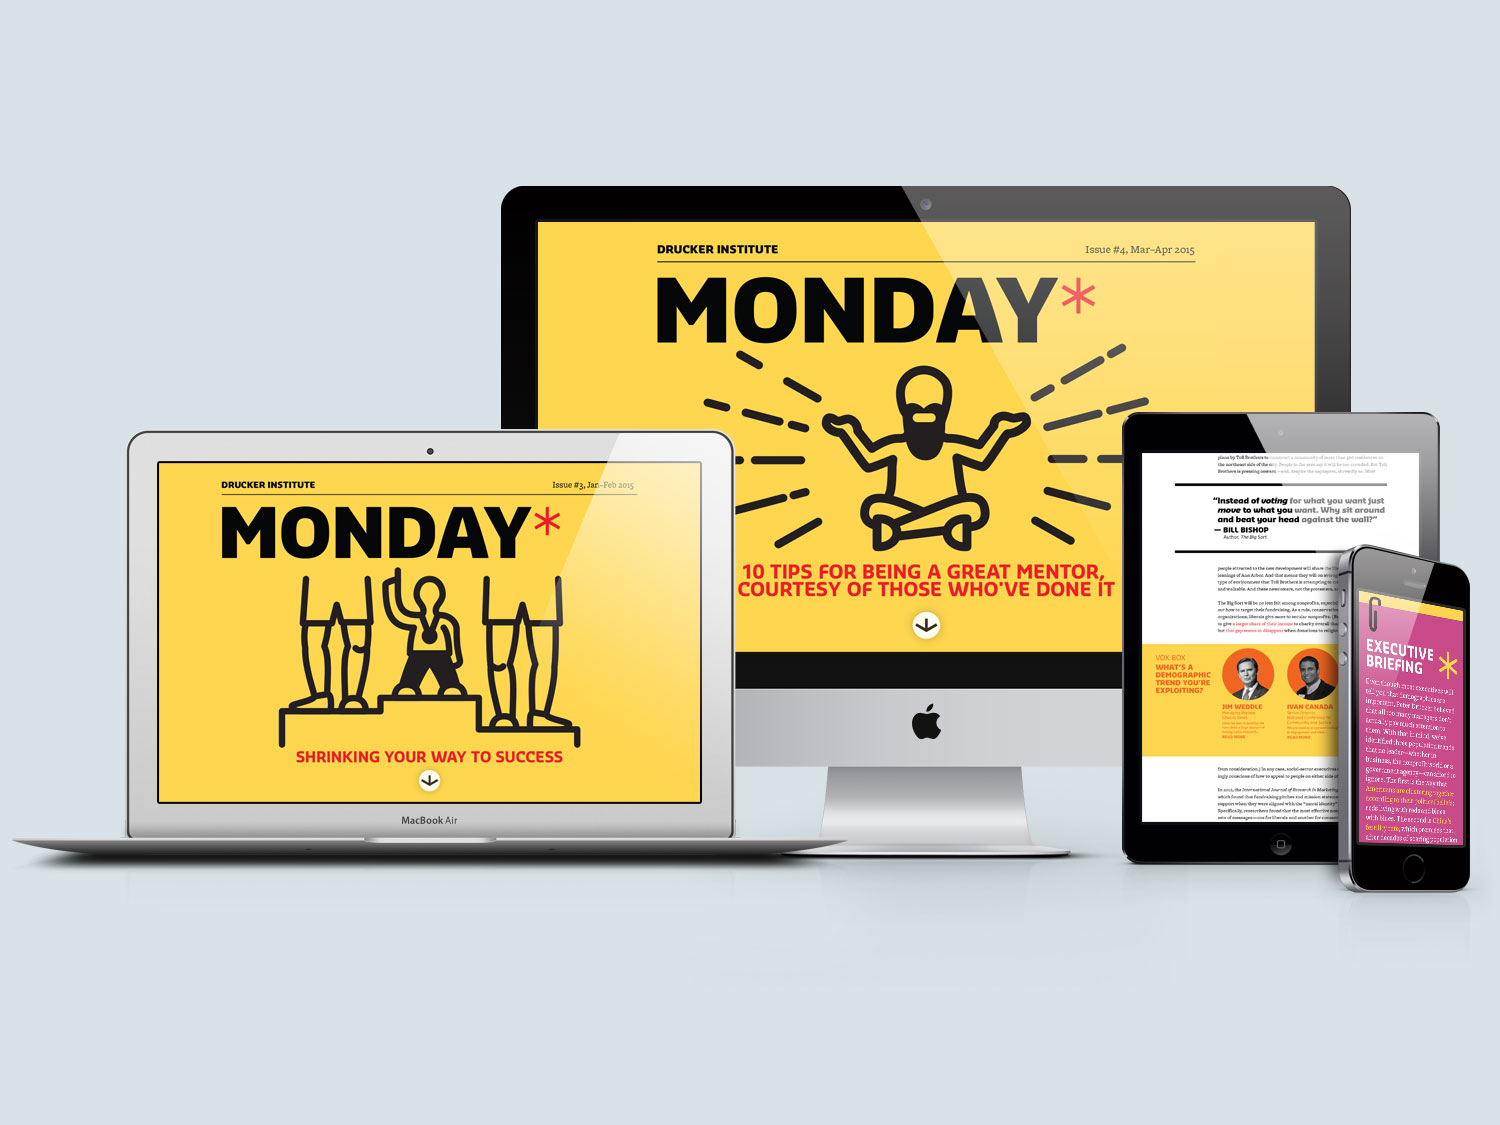 MONDAY*, a Drucker Institute digital publication, designed by Joseph Prichard.